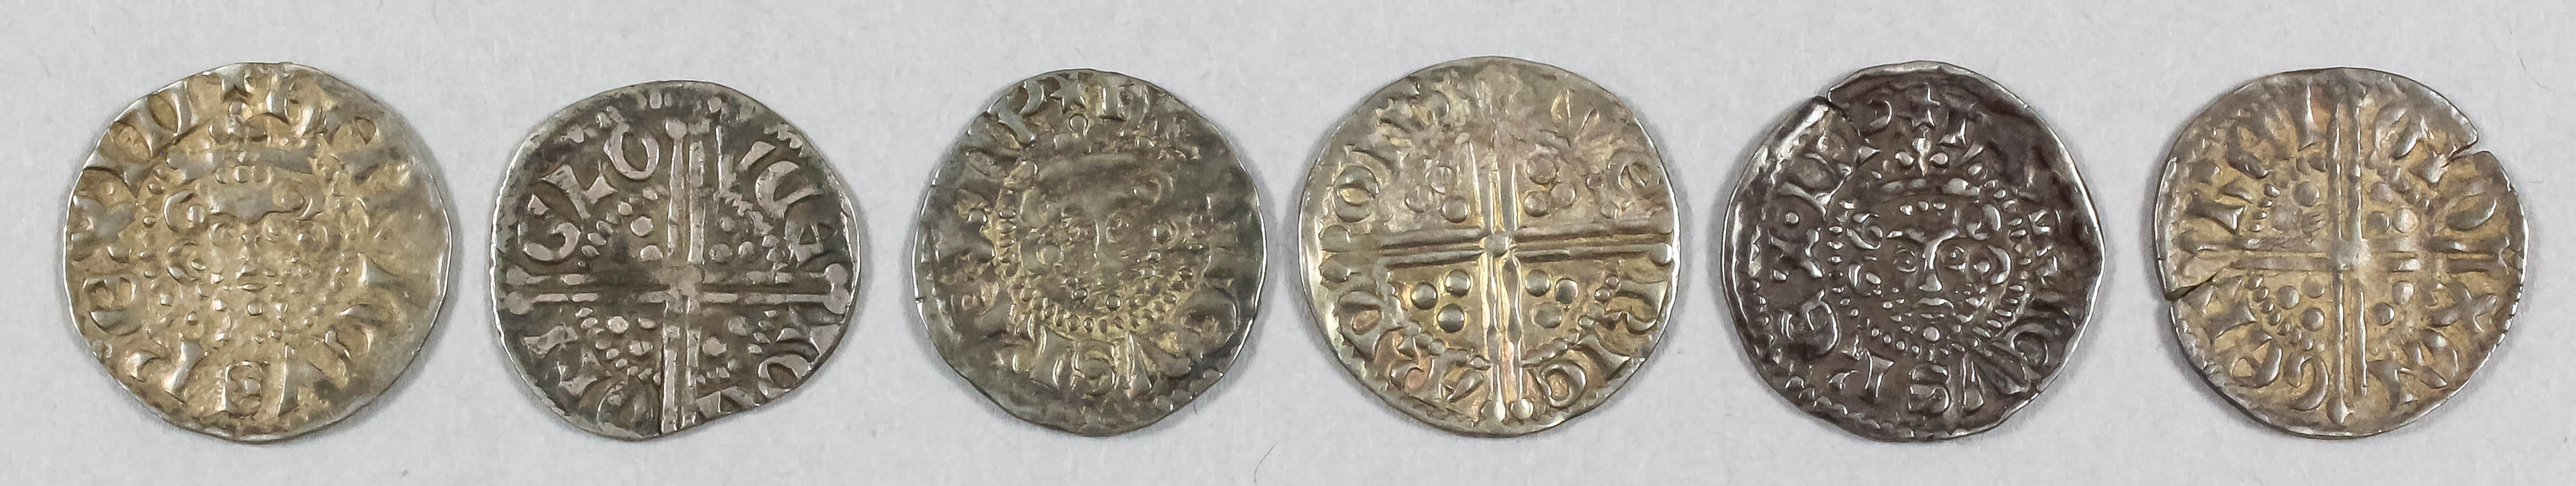 Six Henry III (1216-1272) hammered silver long cross pennies (Bristol, Northampton, Dublin,